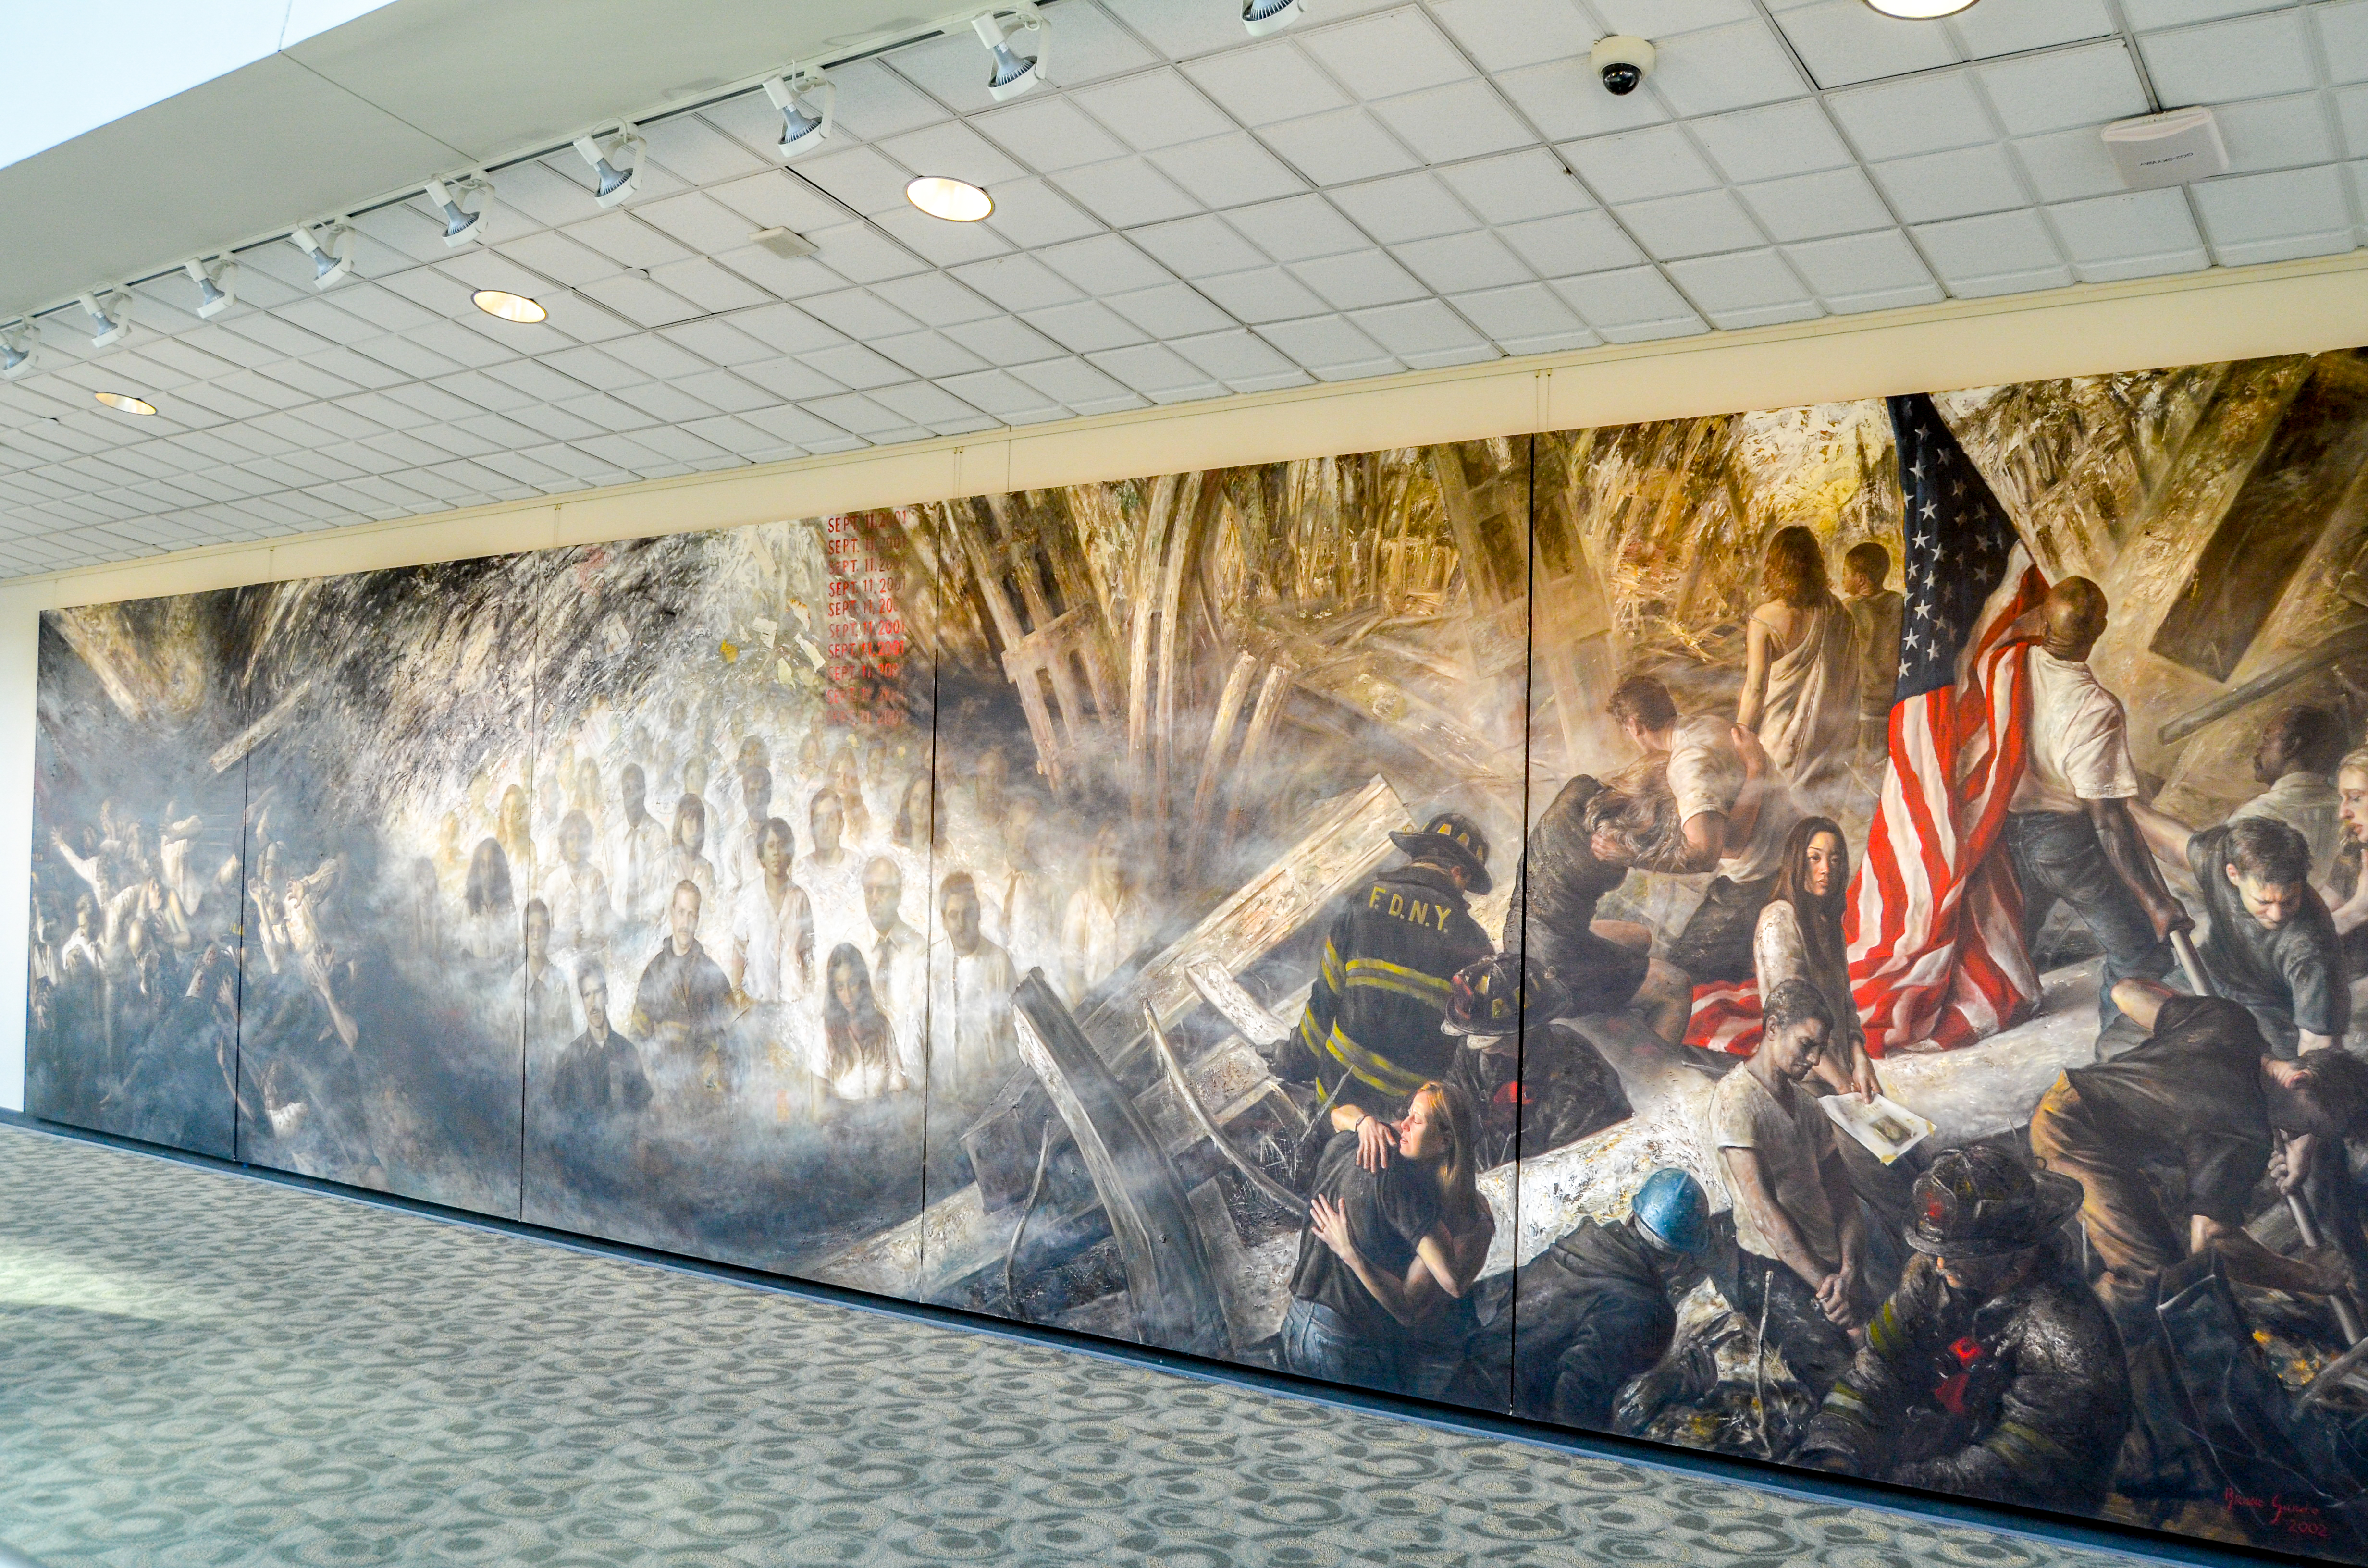 "Tragedy, Memory and Honor" by Bruno Surdo, inside DeVos Place Convention Center